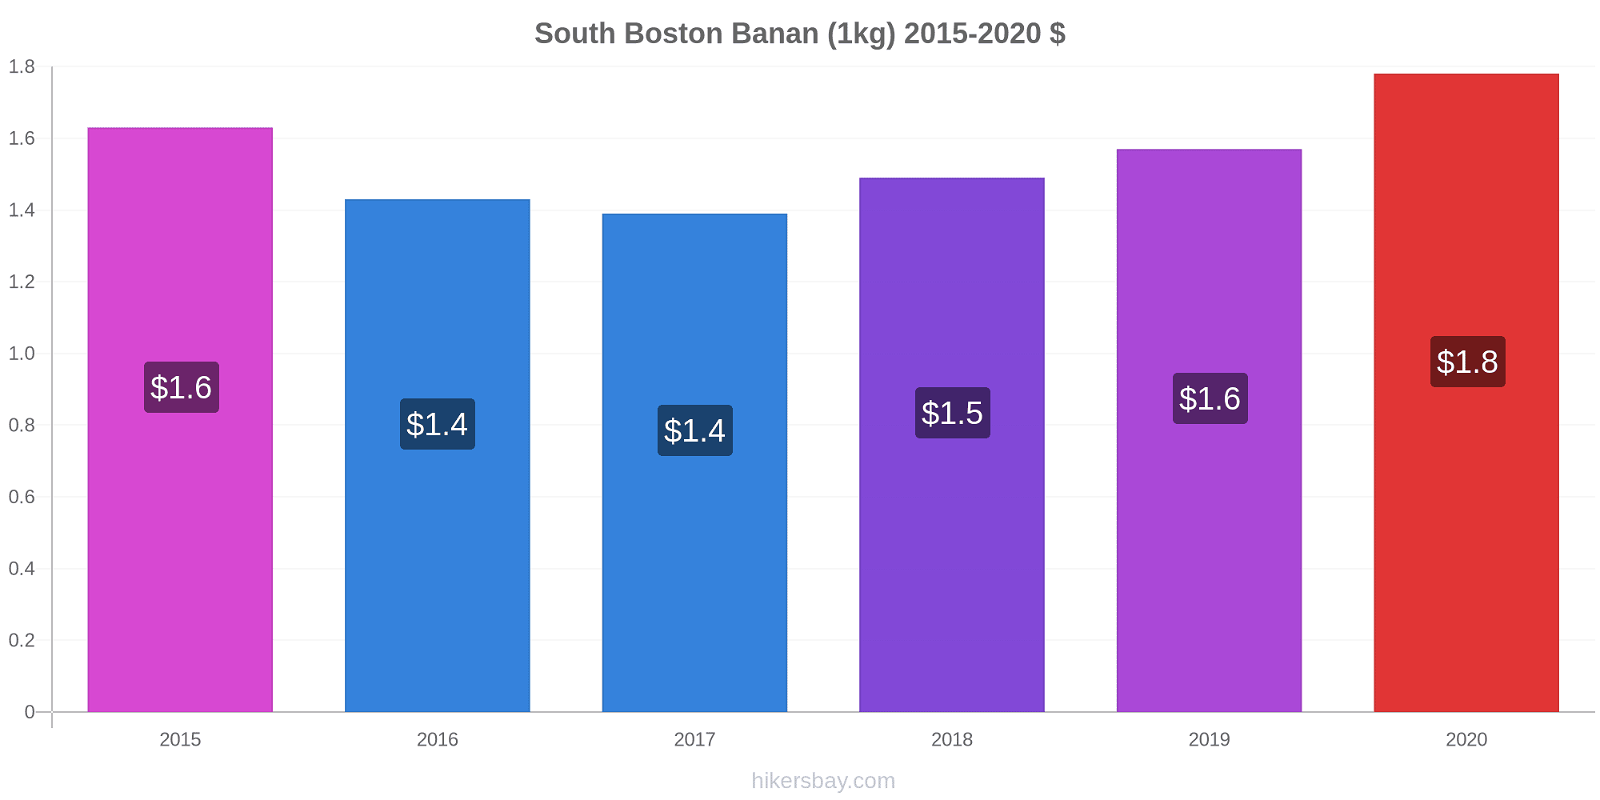 South Boston prisændringer Banan (1kg) hikersbay.com